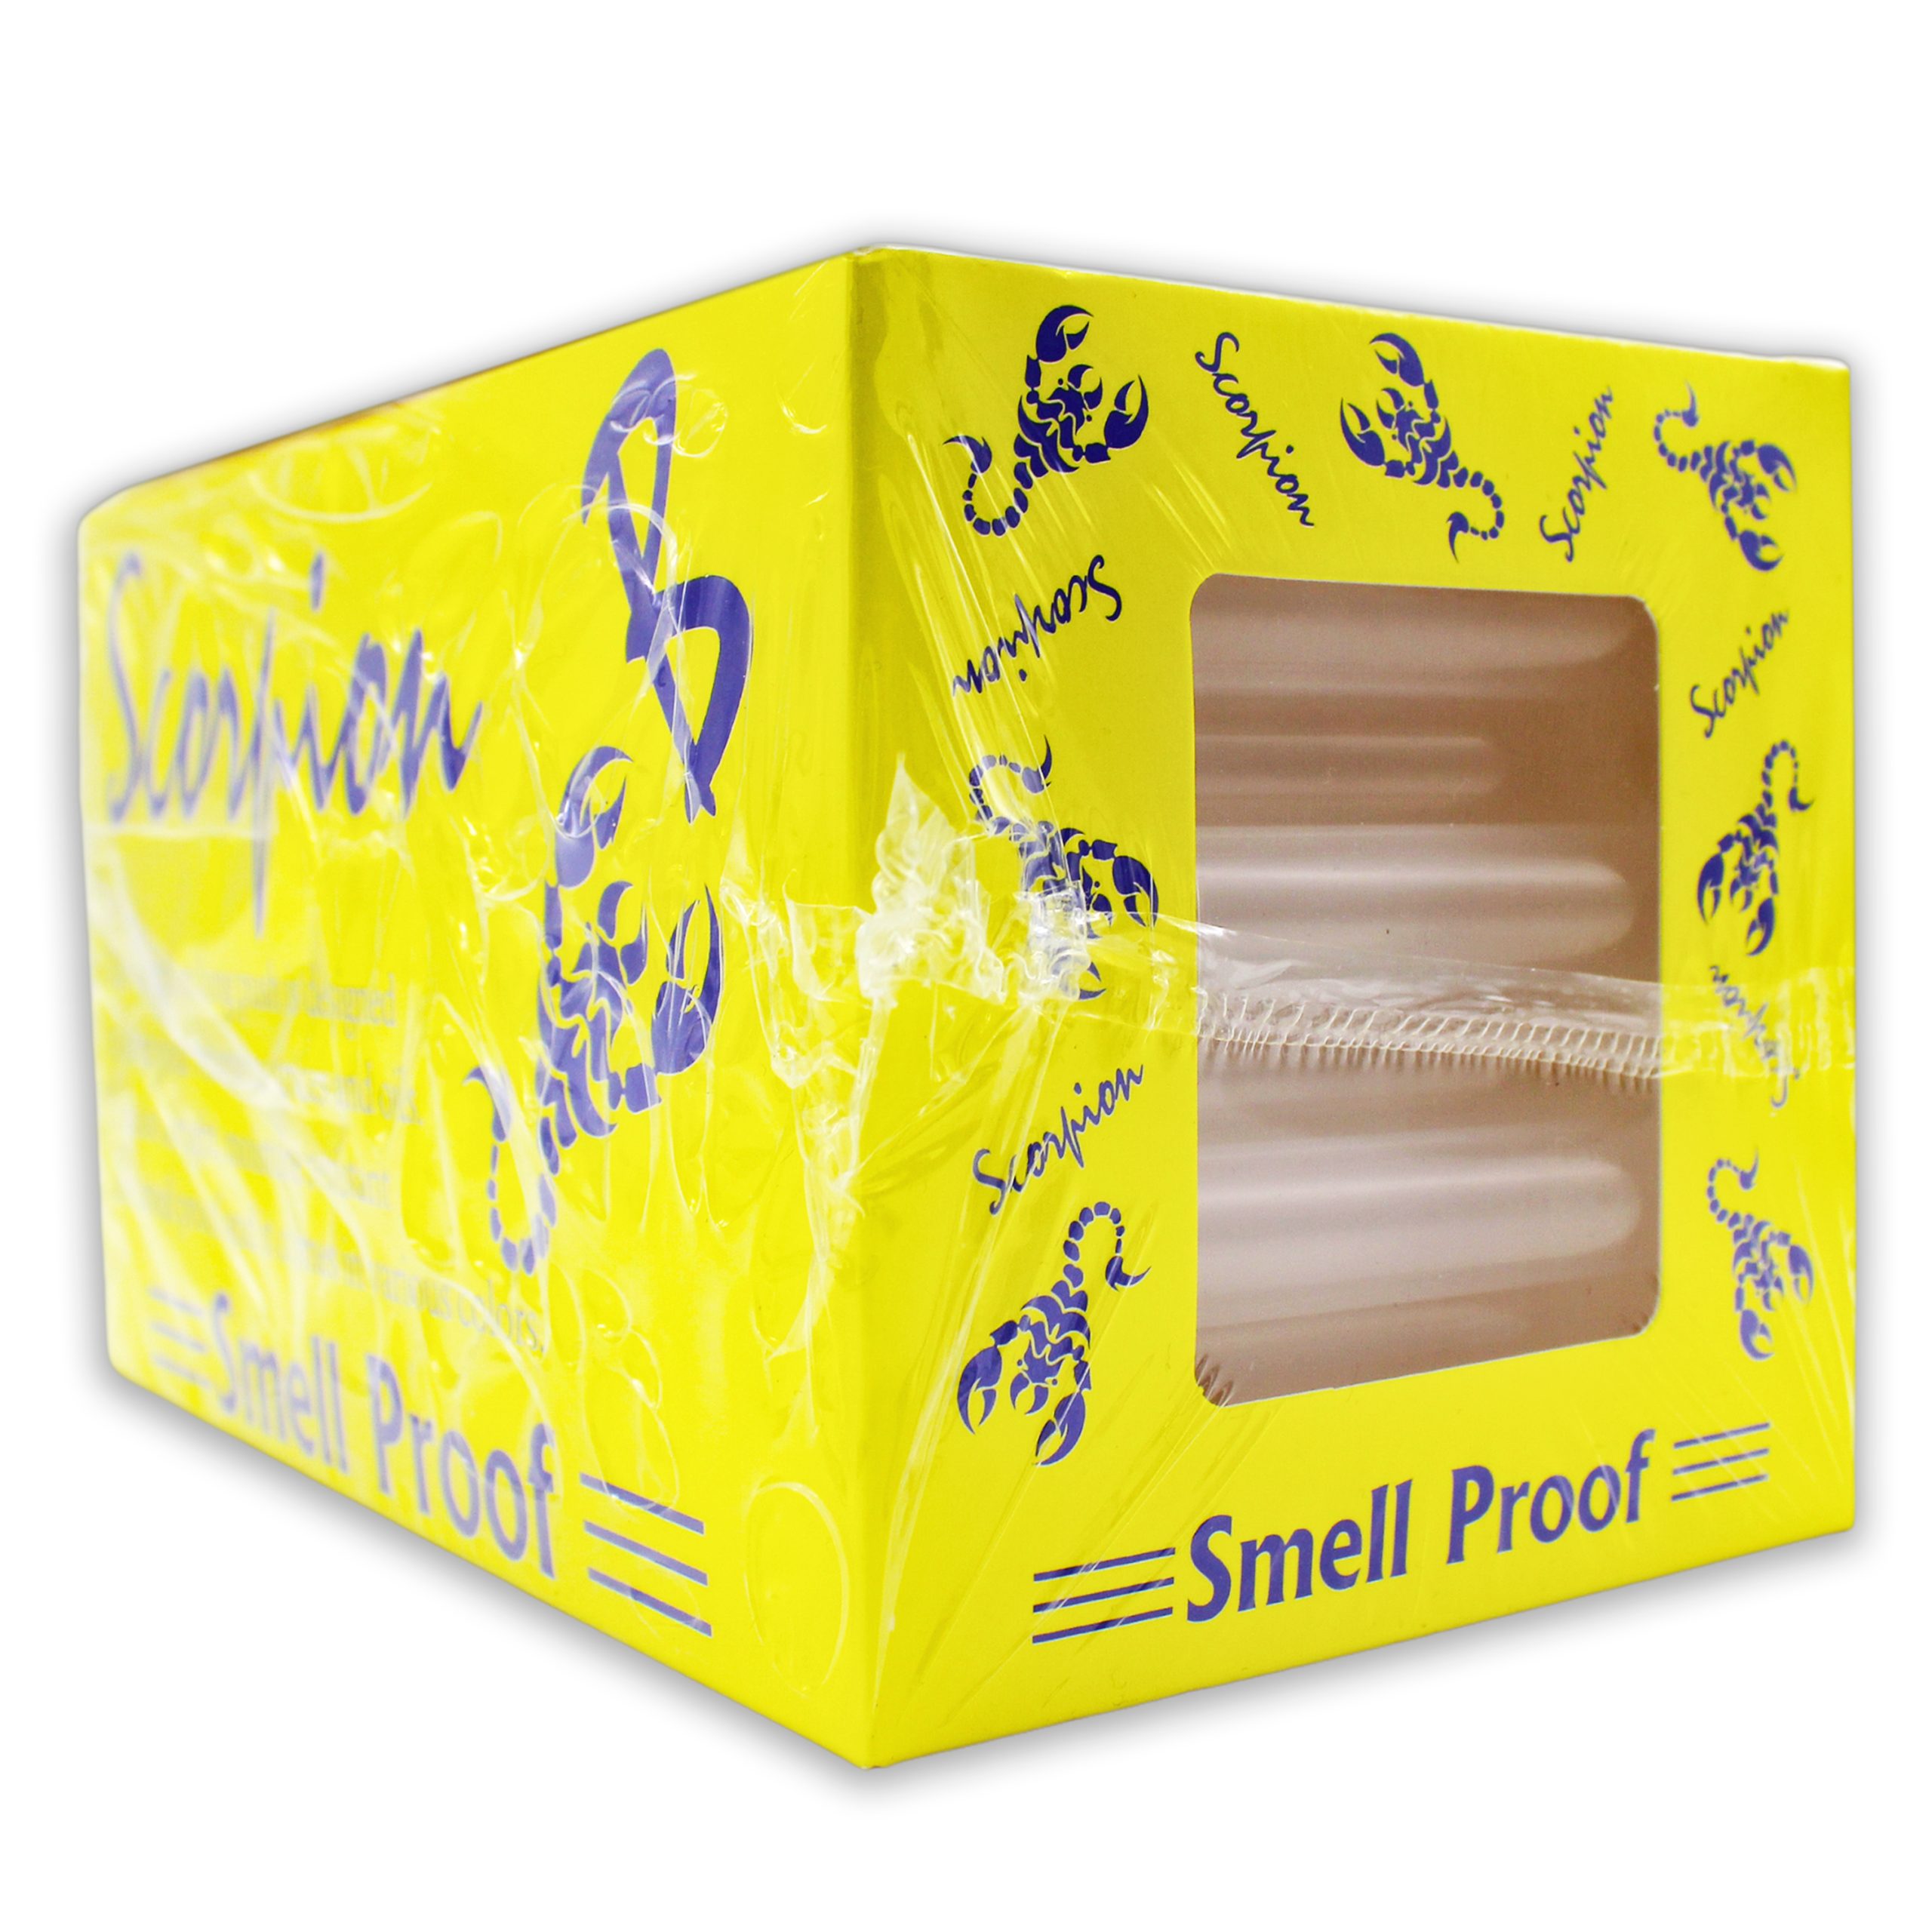 SCORPION SMELL PROOF TUBE CLEAR 100CT BOX - Empire Smoke Distributors